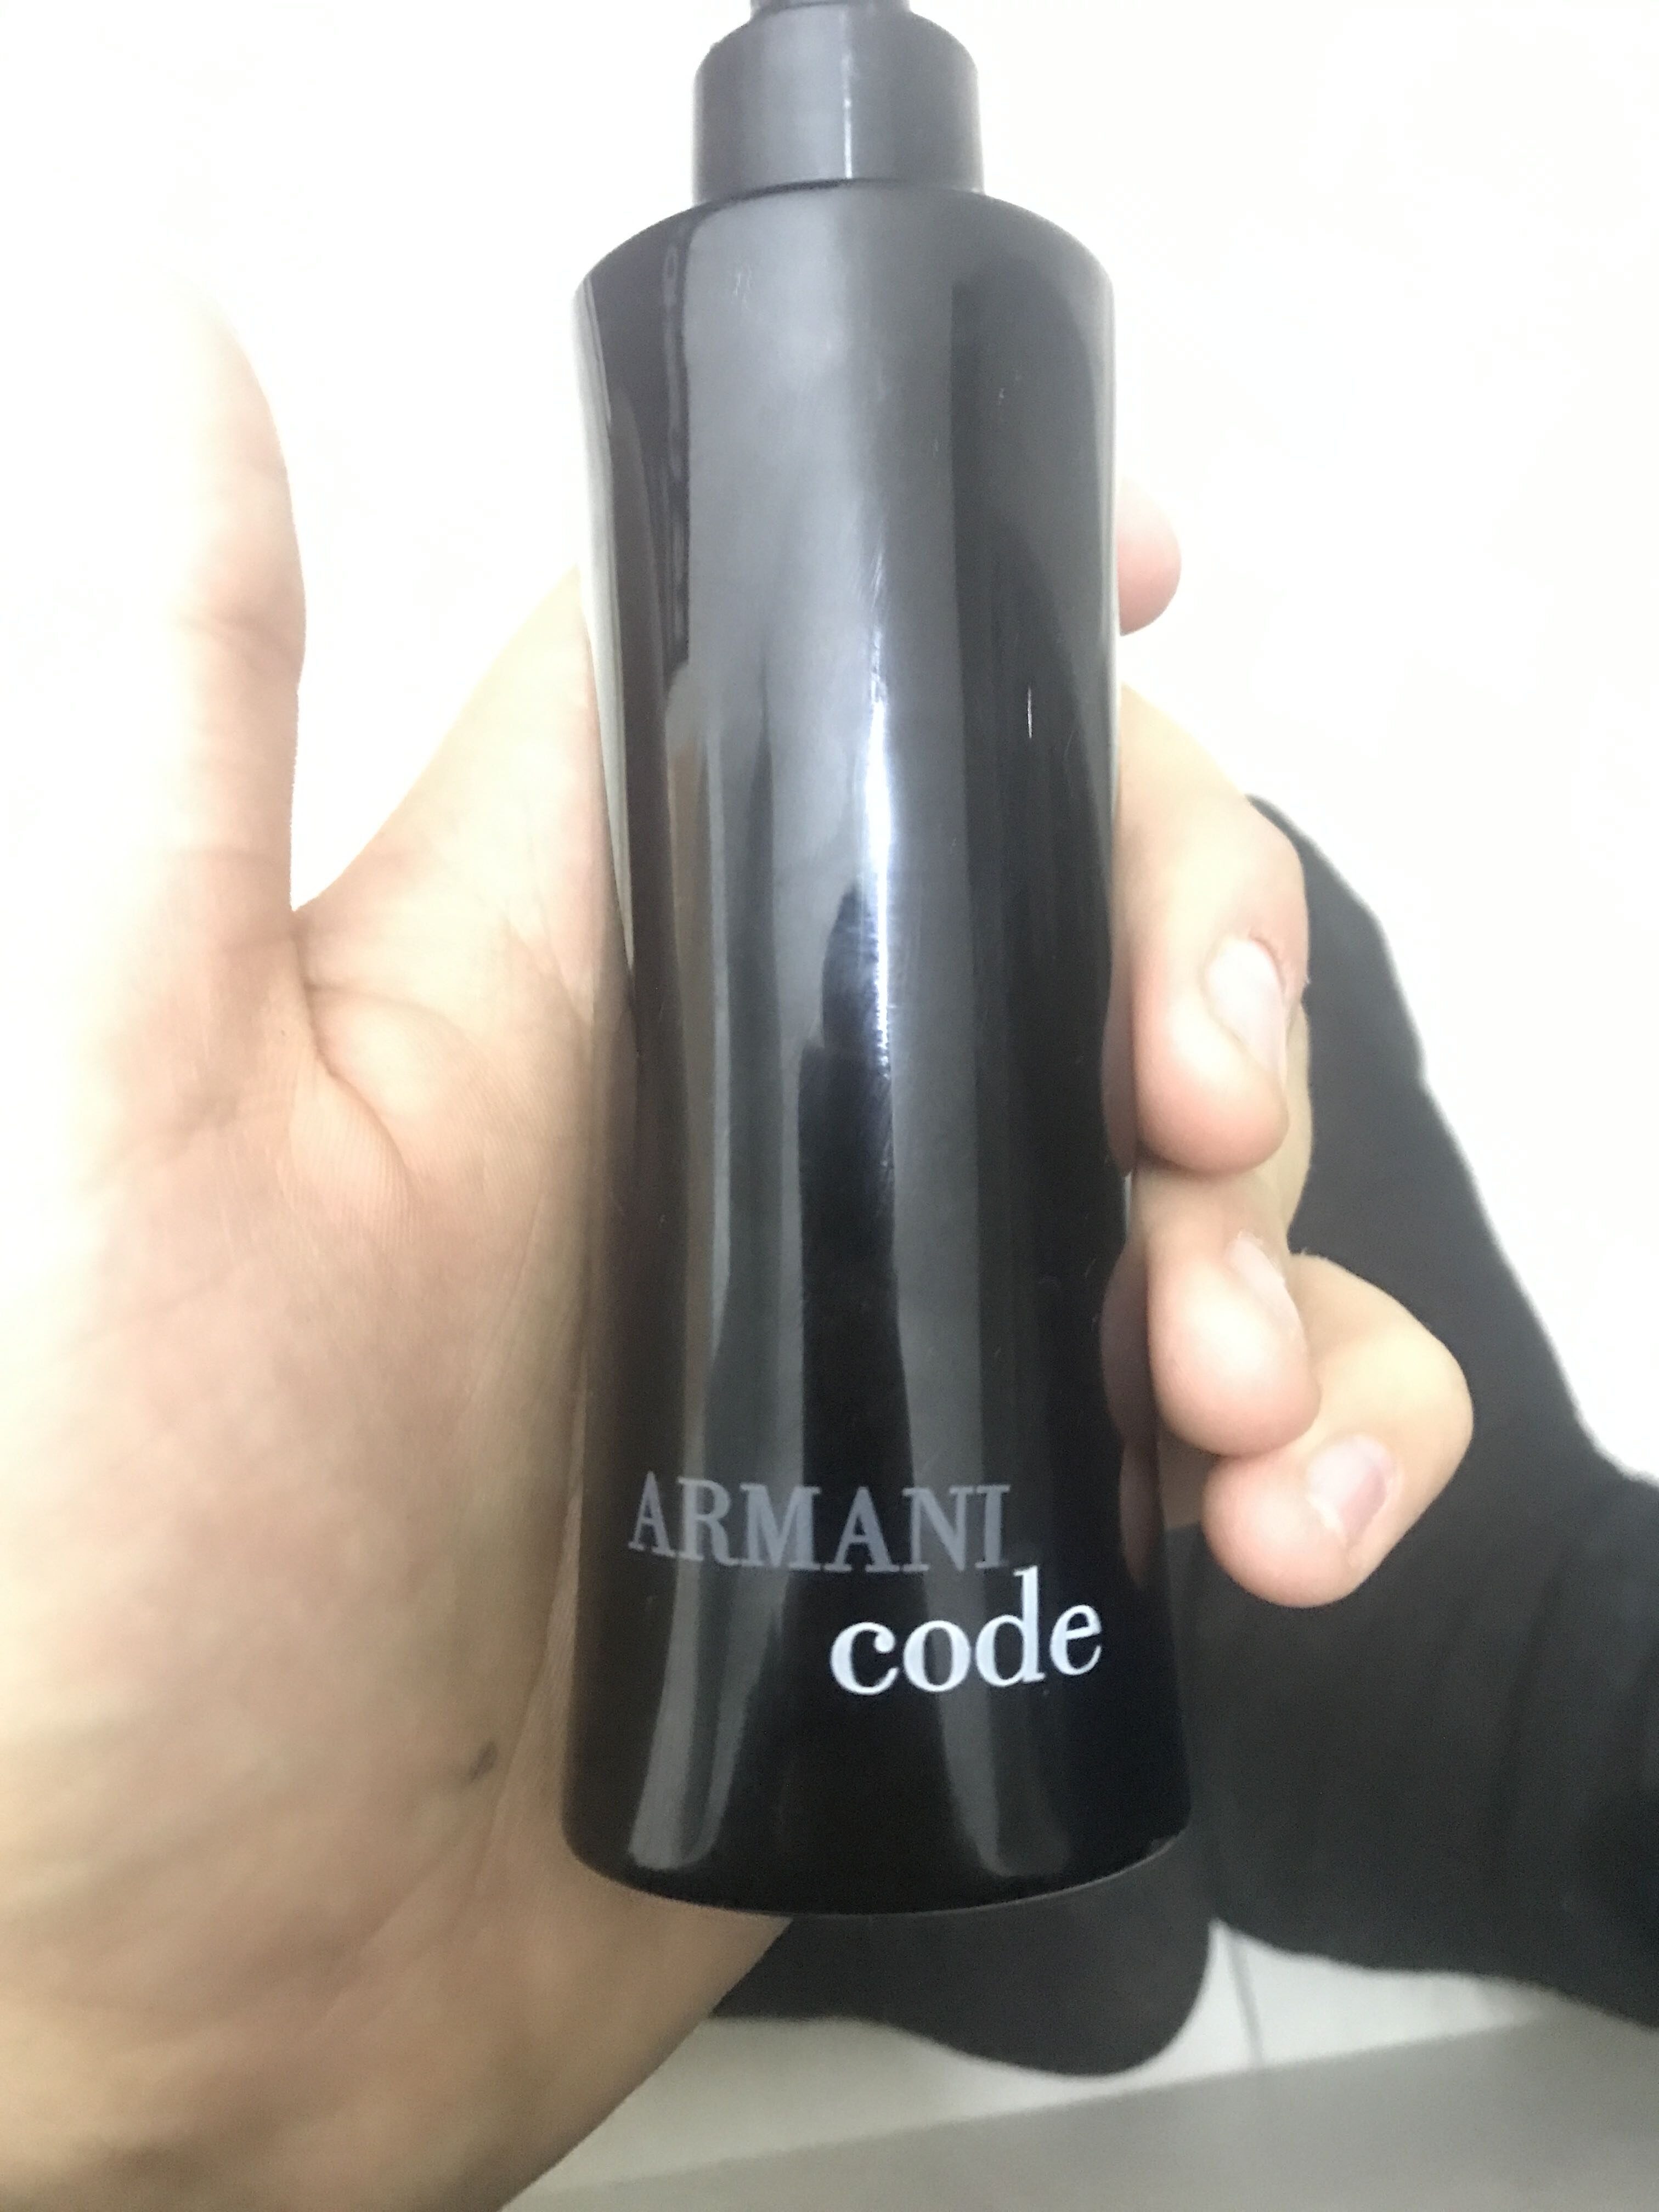 armani code - Product - en